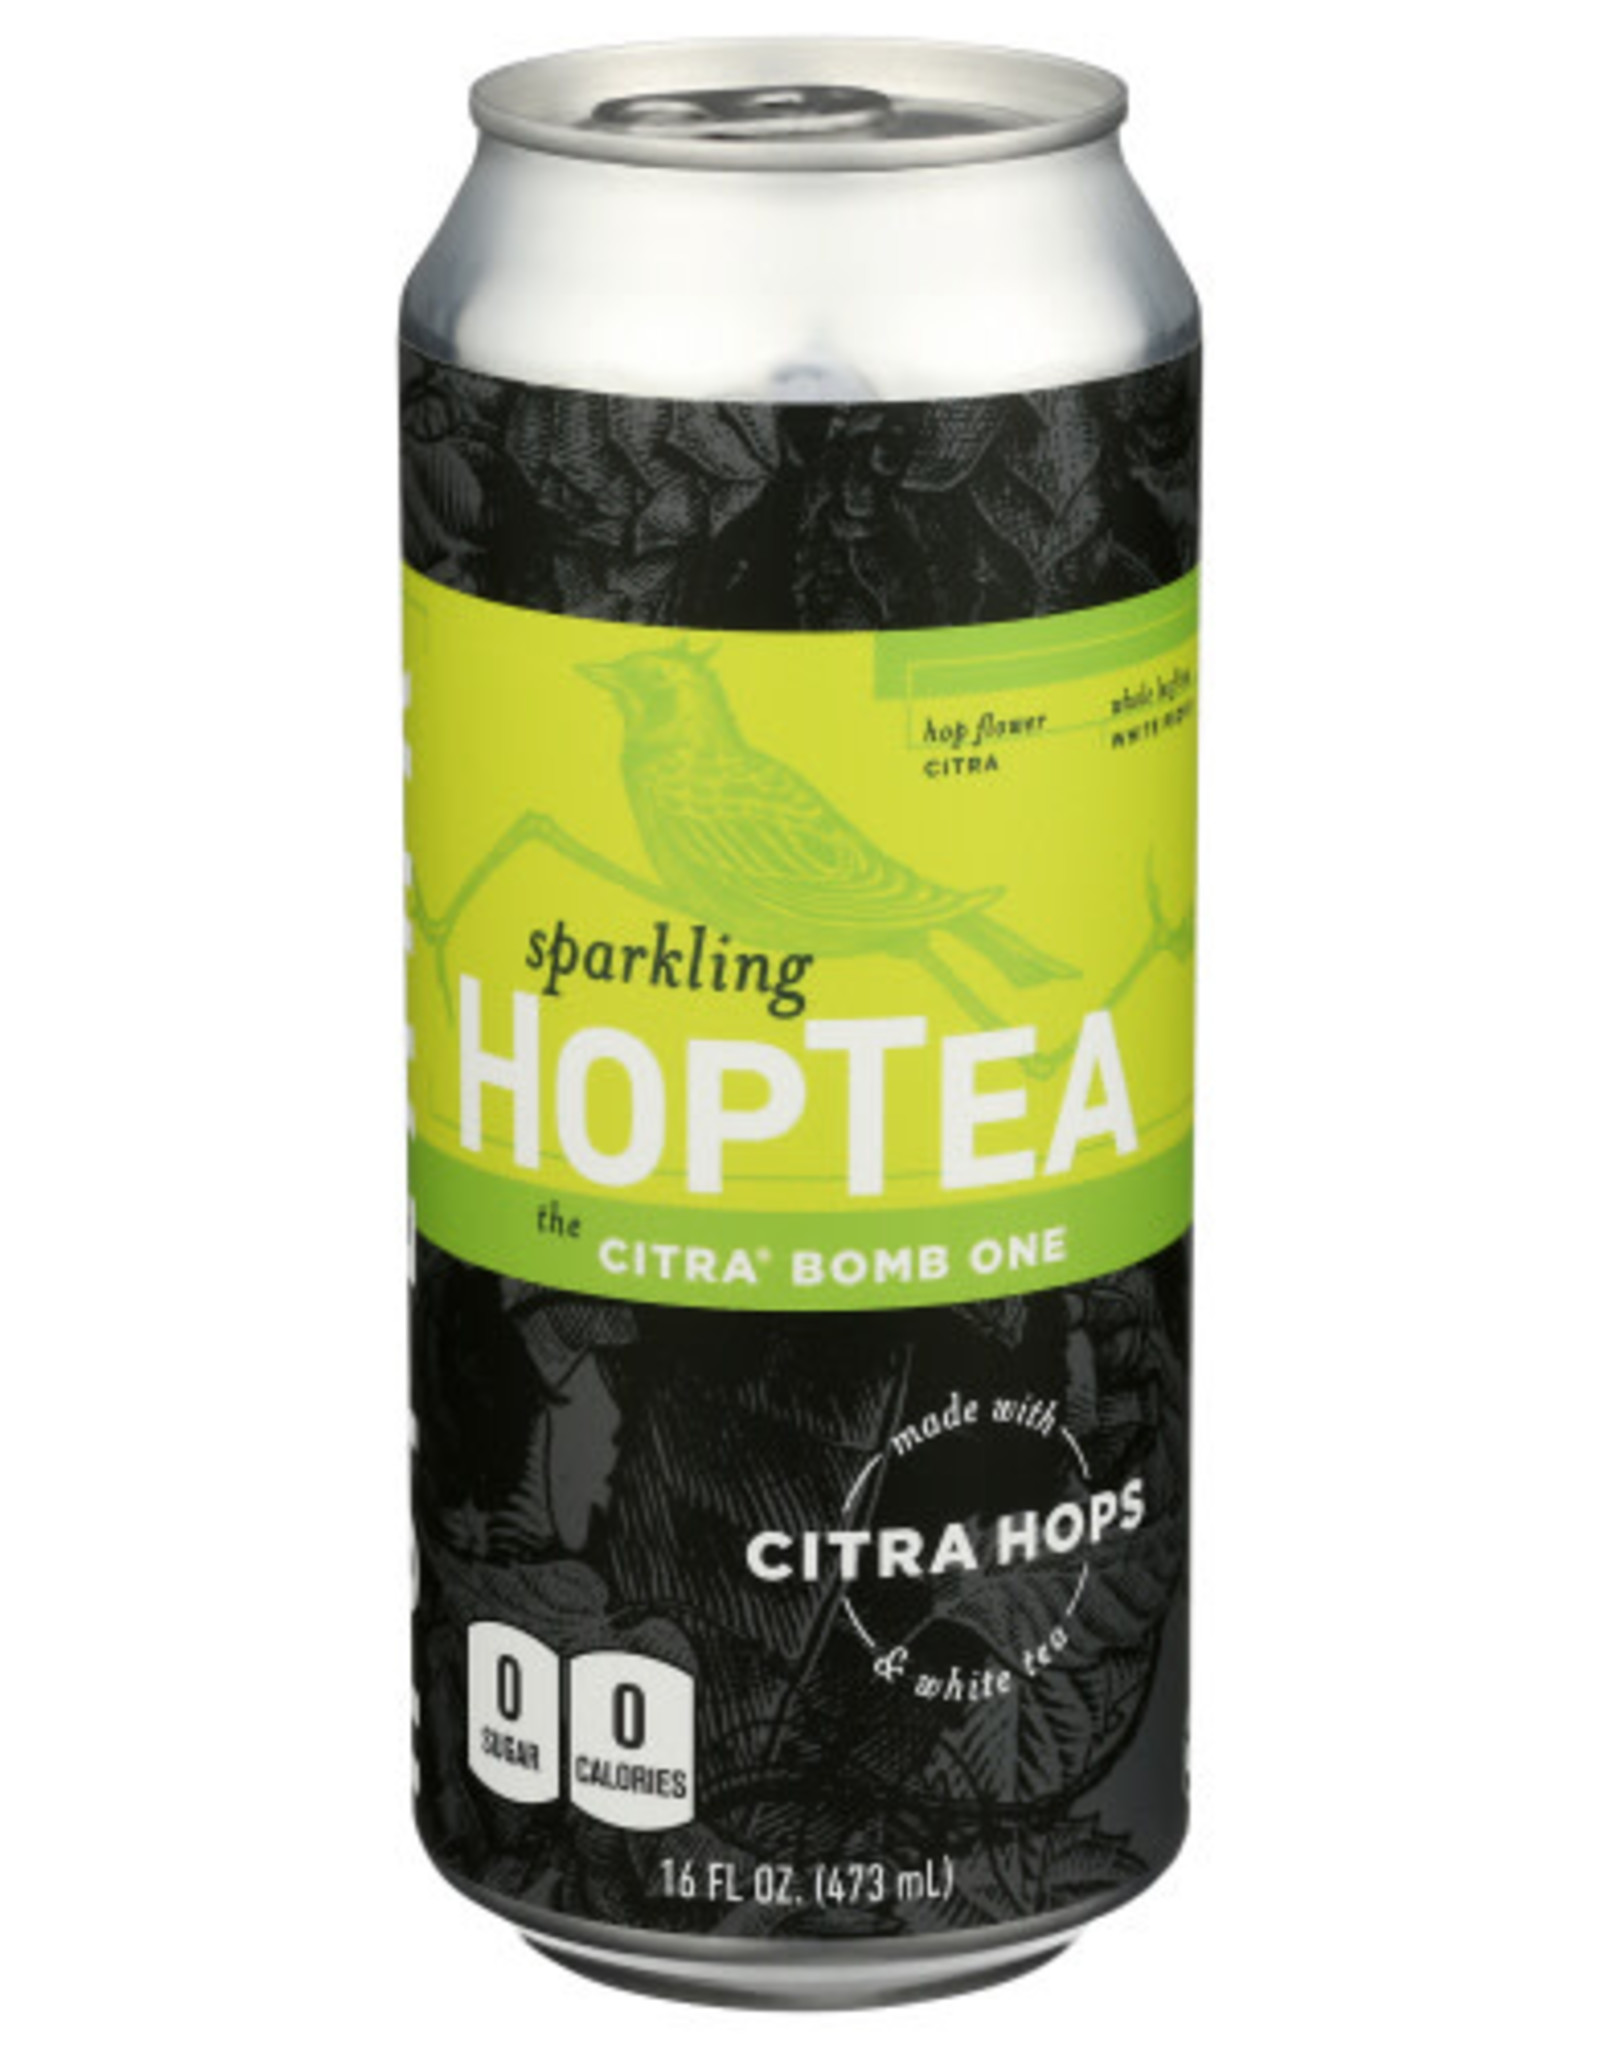 Hoplark Tea Citra Bomb One